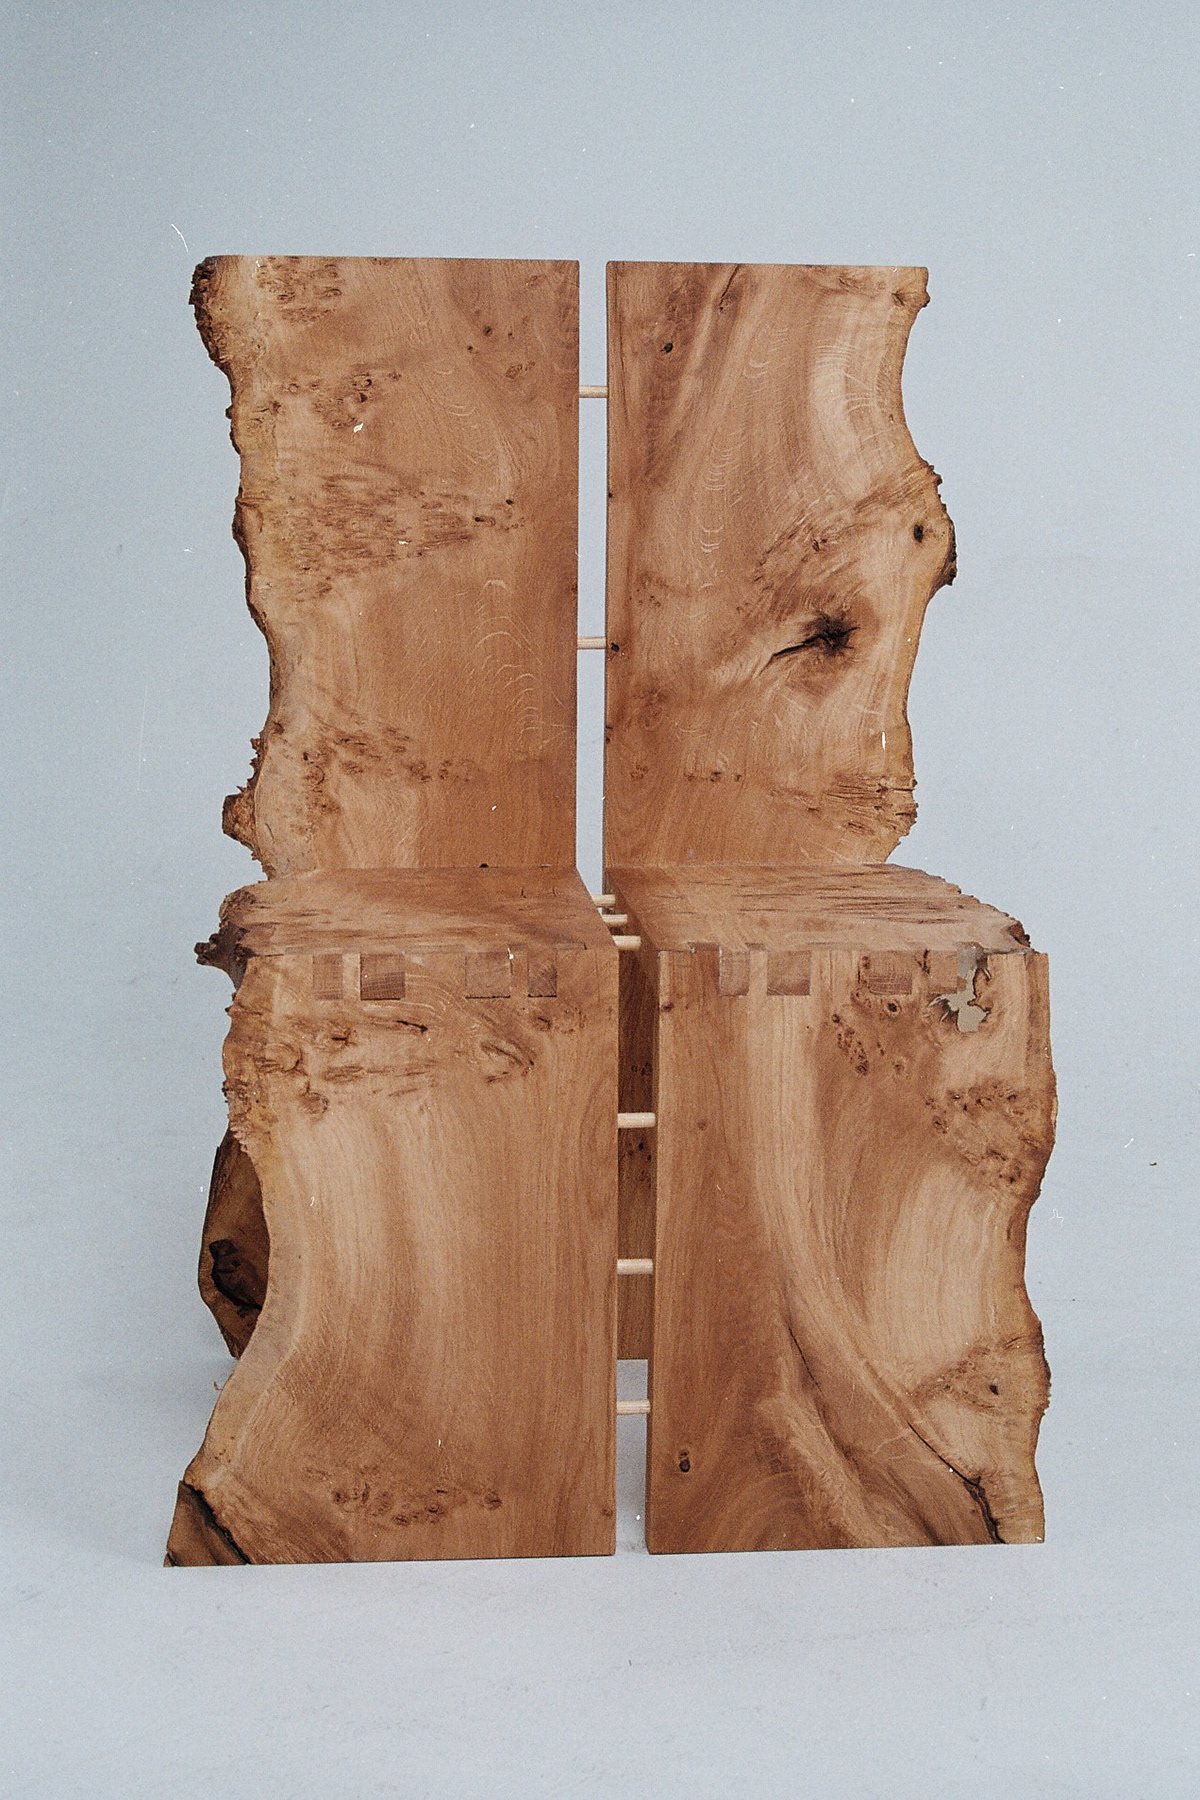 furniture  Contempoary  SEAT   Wood  modern oak  Outdoor  bespoke  hand made